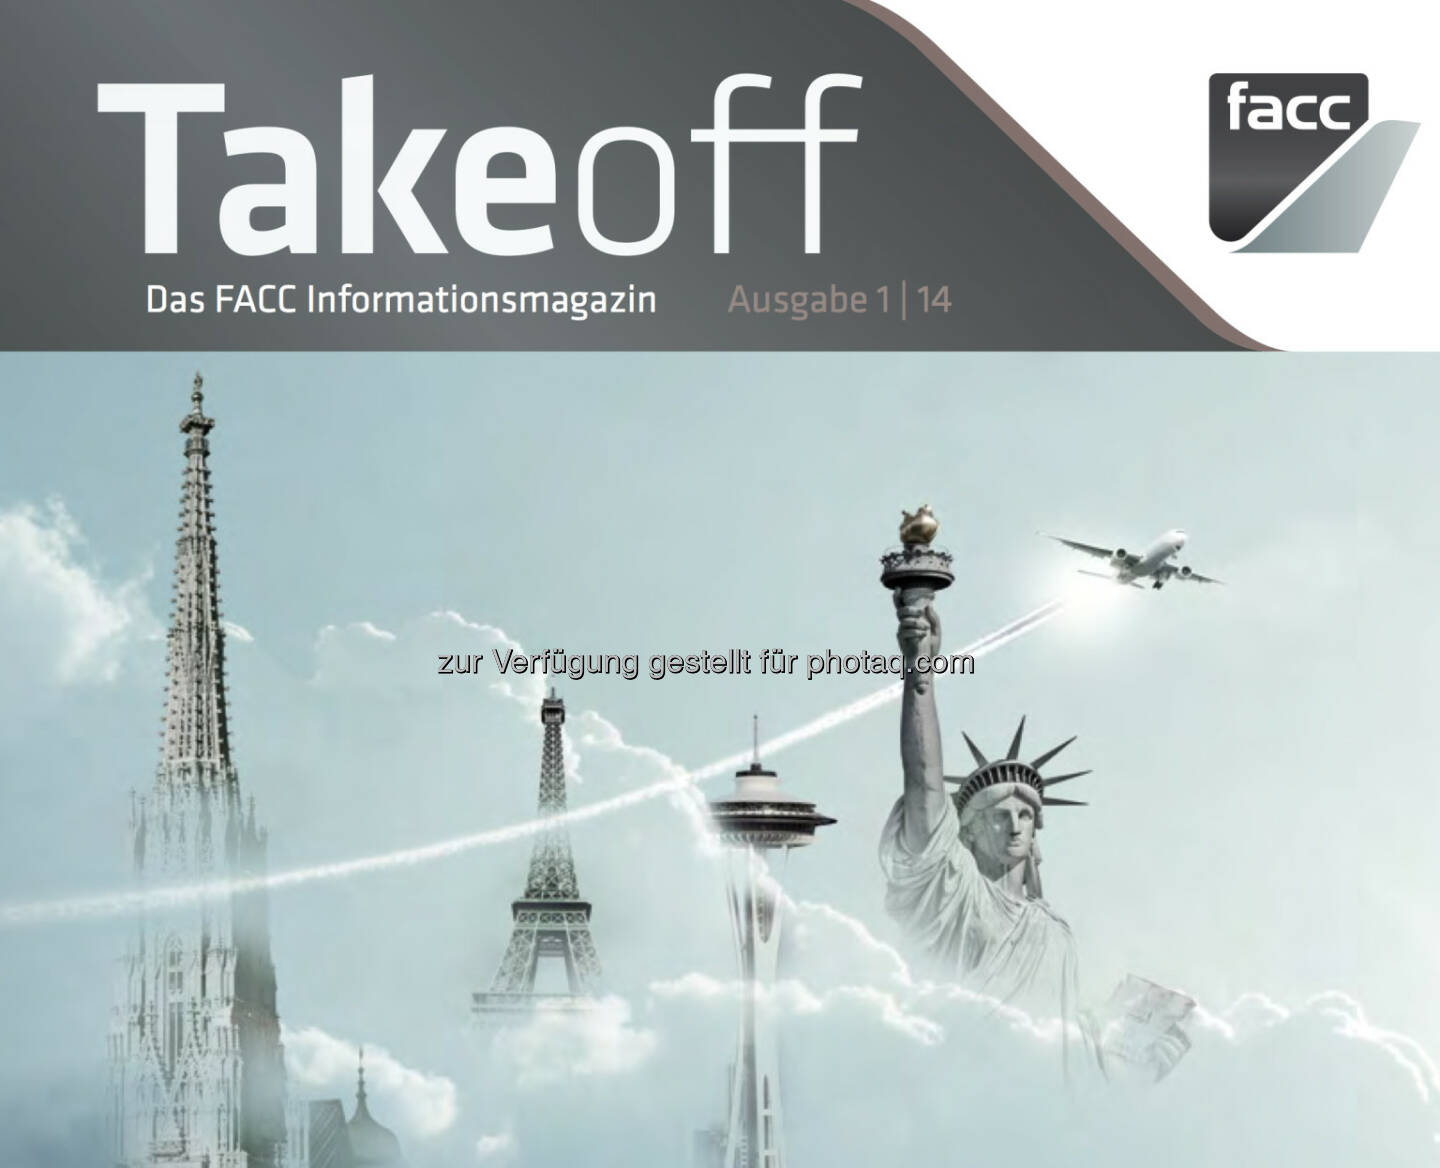 Takeoff - das Magazin des Börsegängers FACC http://www.facc.com/Aktuelles/Take-off-Magazine/Take-off-magazine